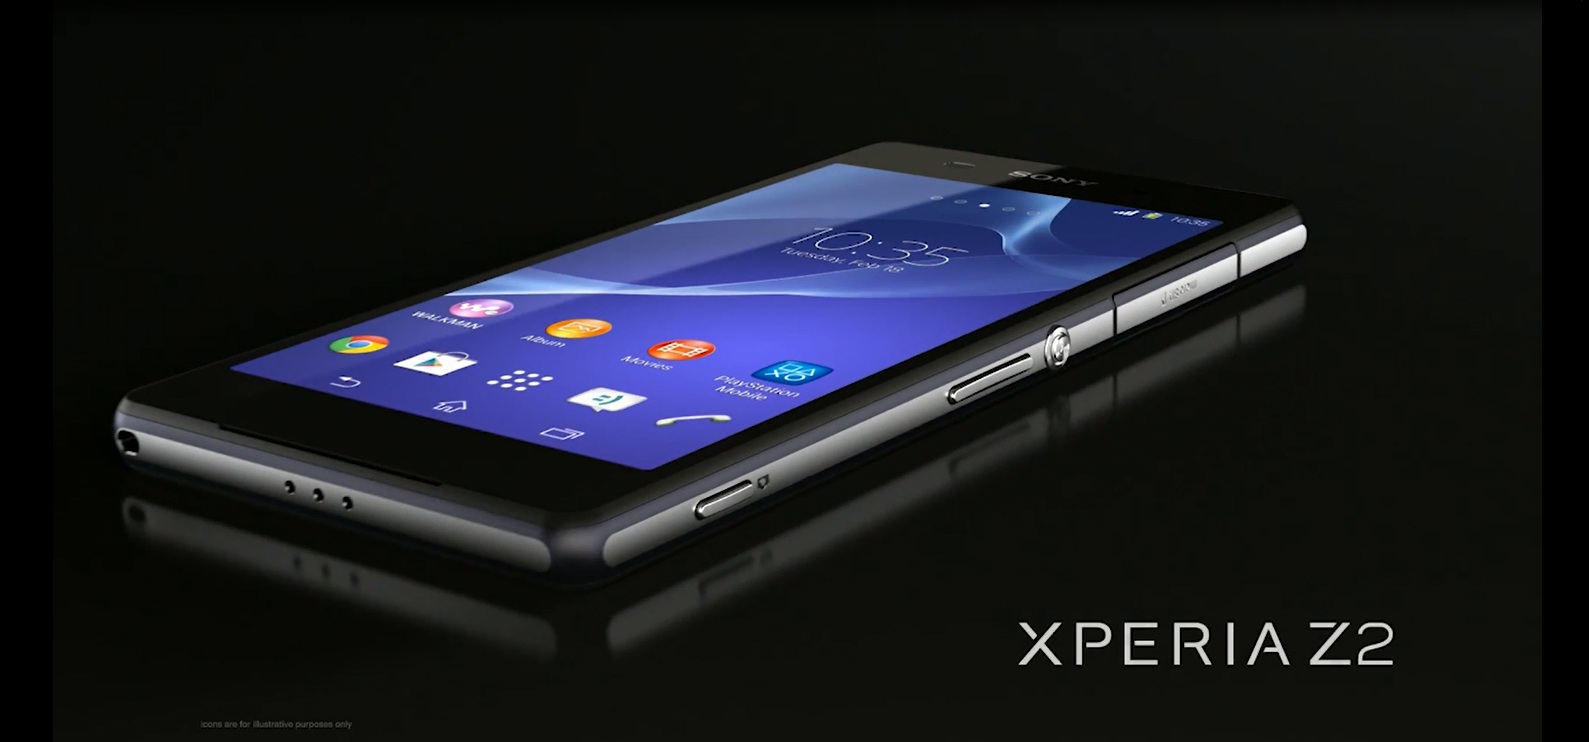 Viata cu un Xperia Z2 – cel mai bun smartphone Sony de la aparitia T610